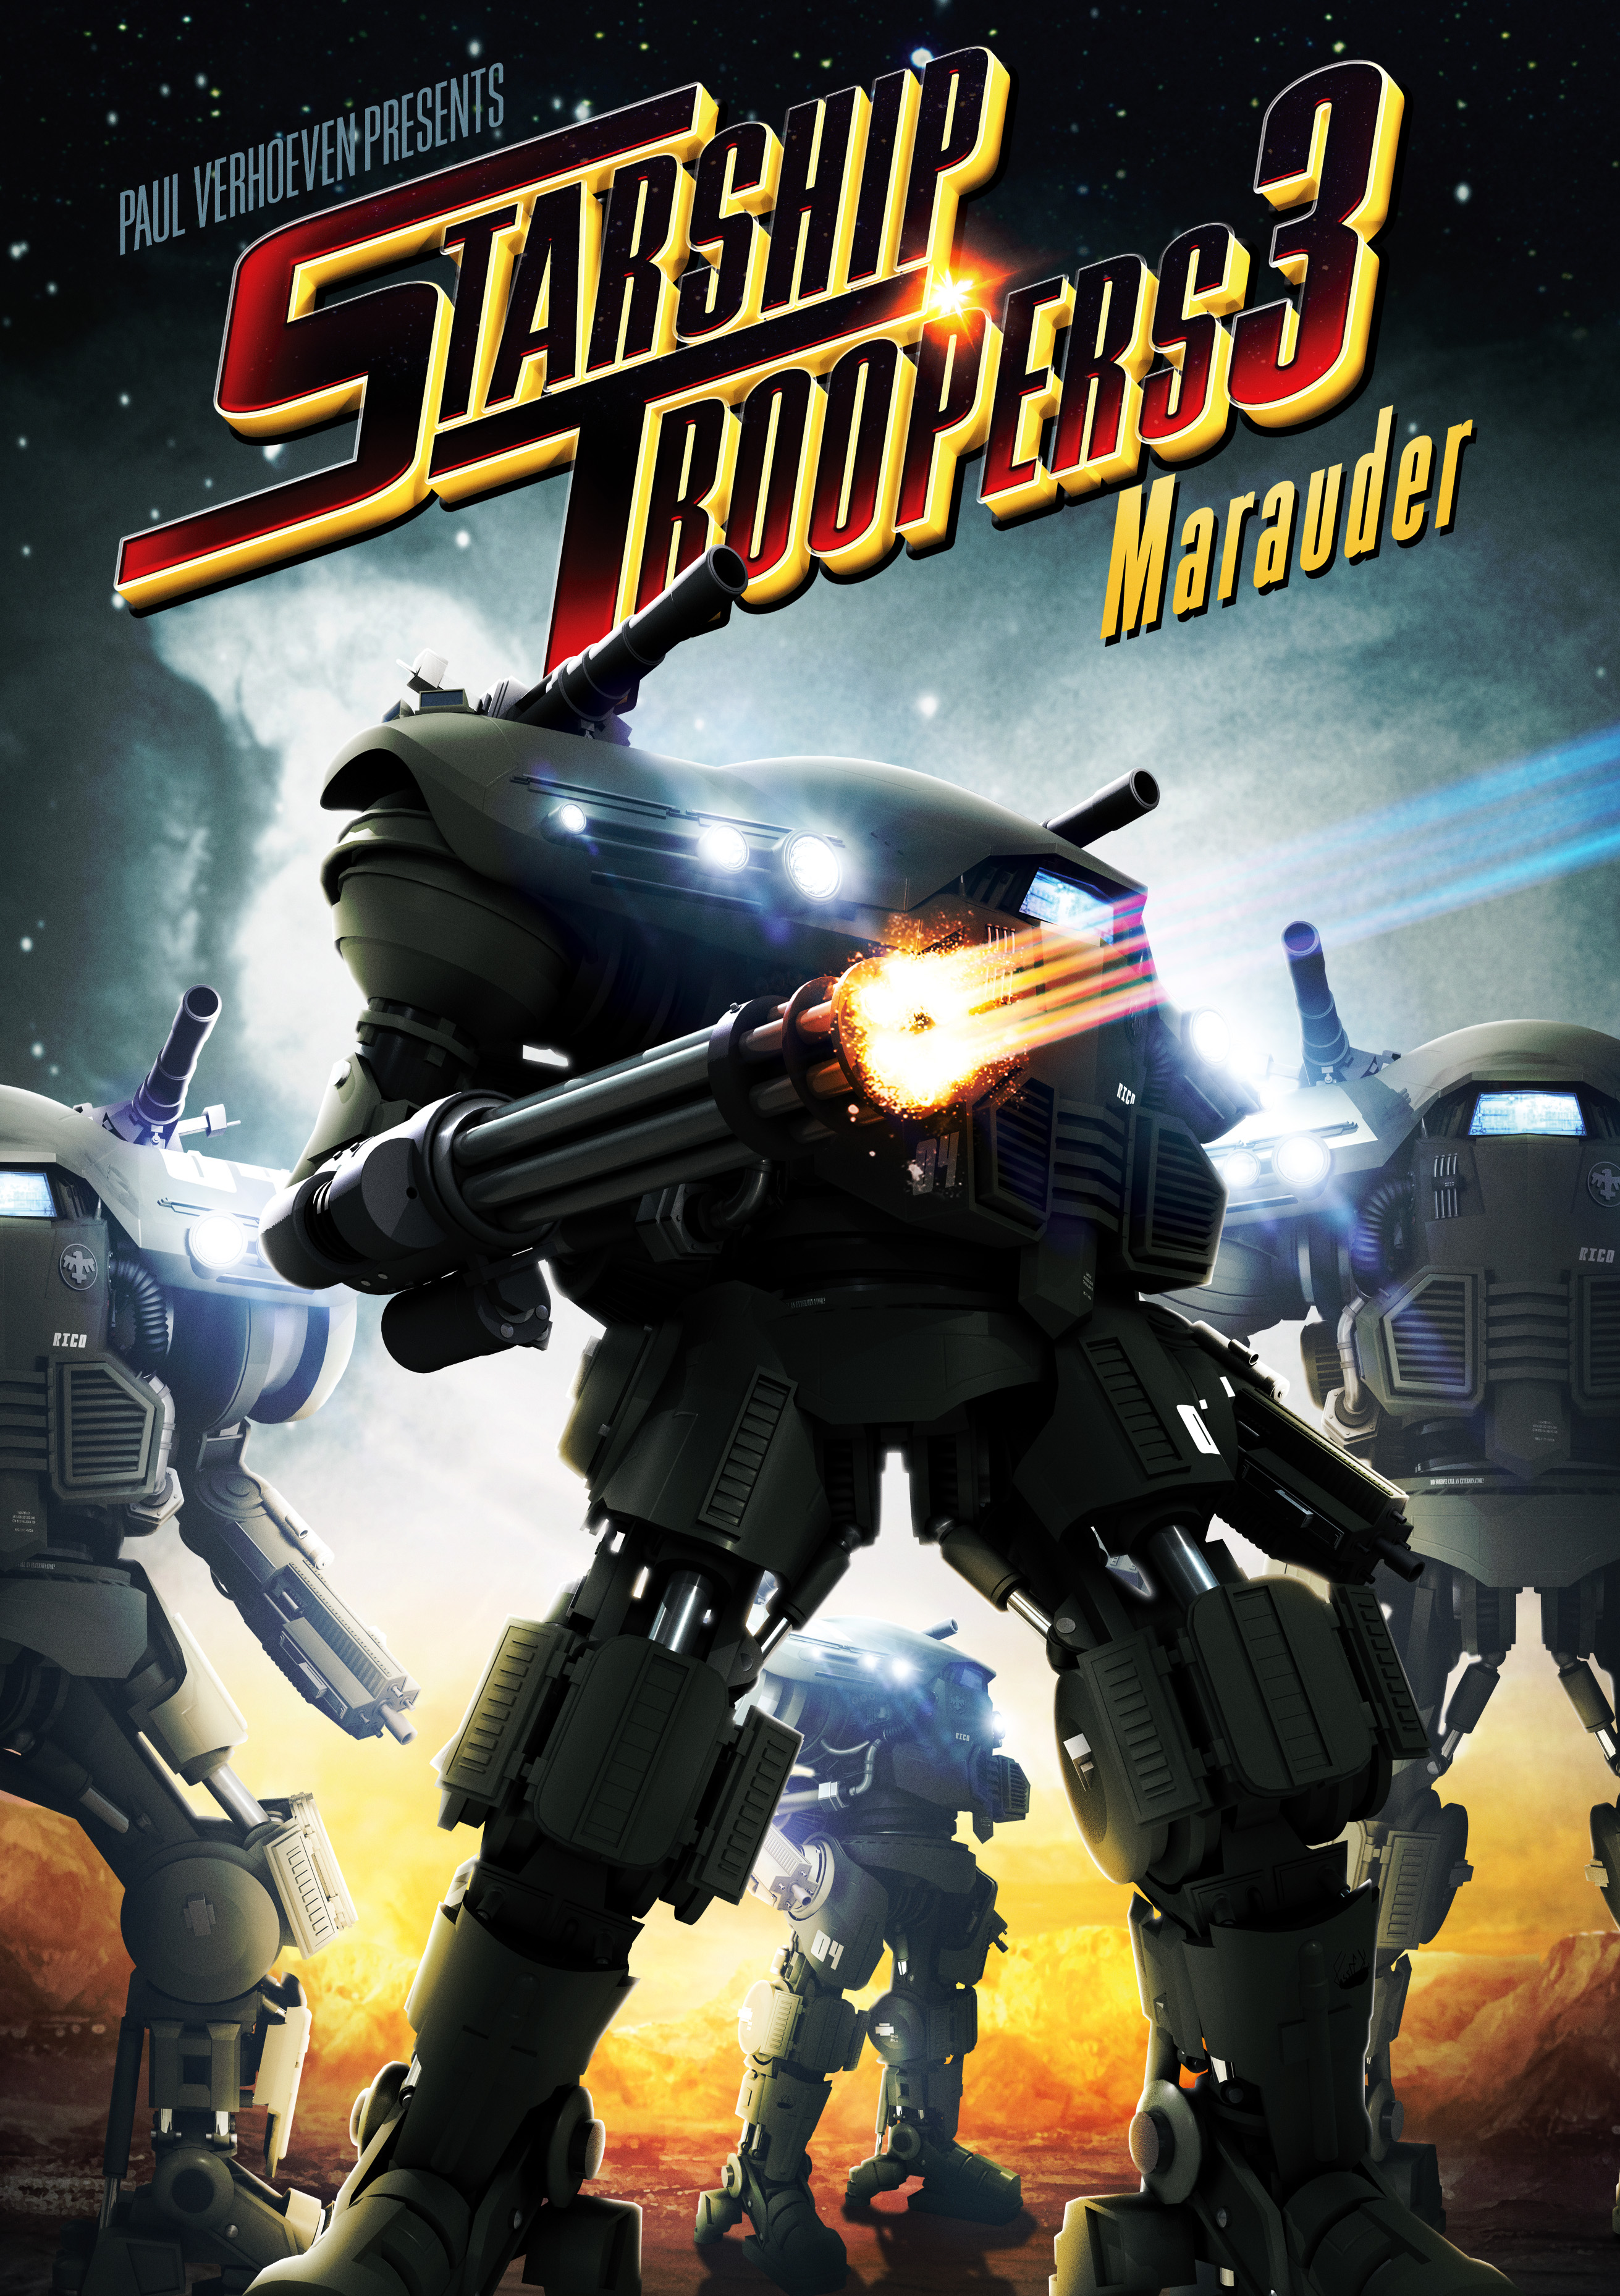 Starship troopers marauders